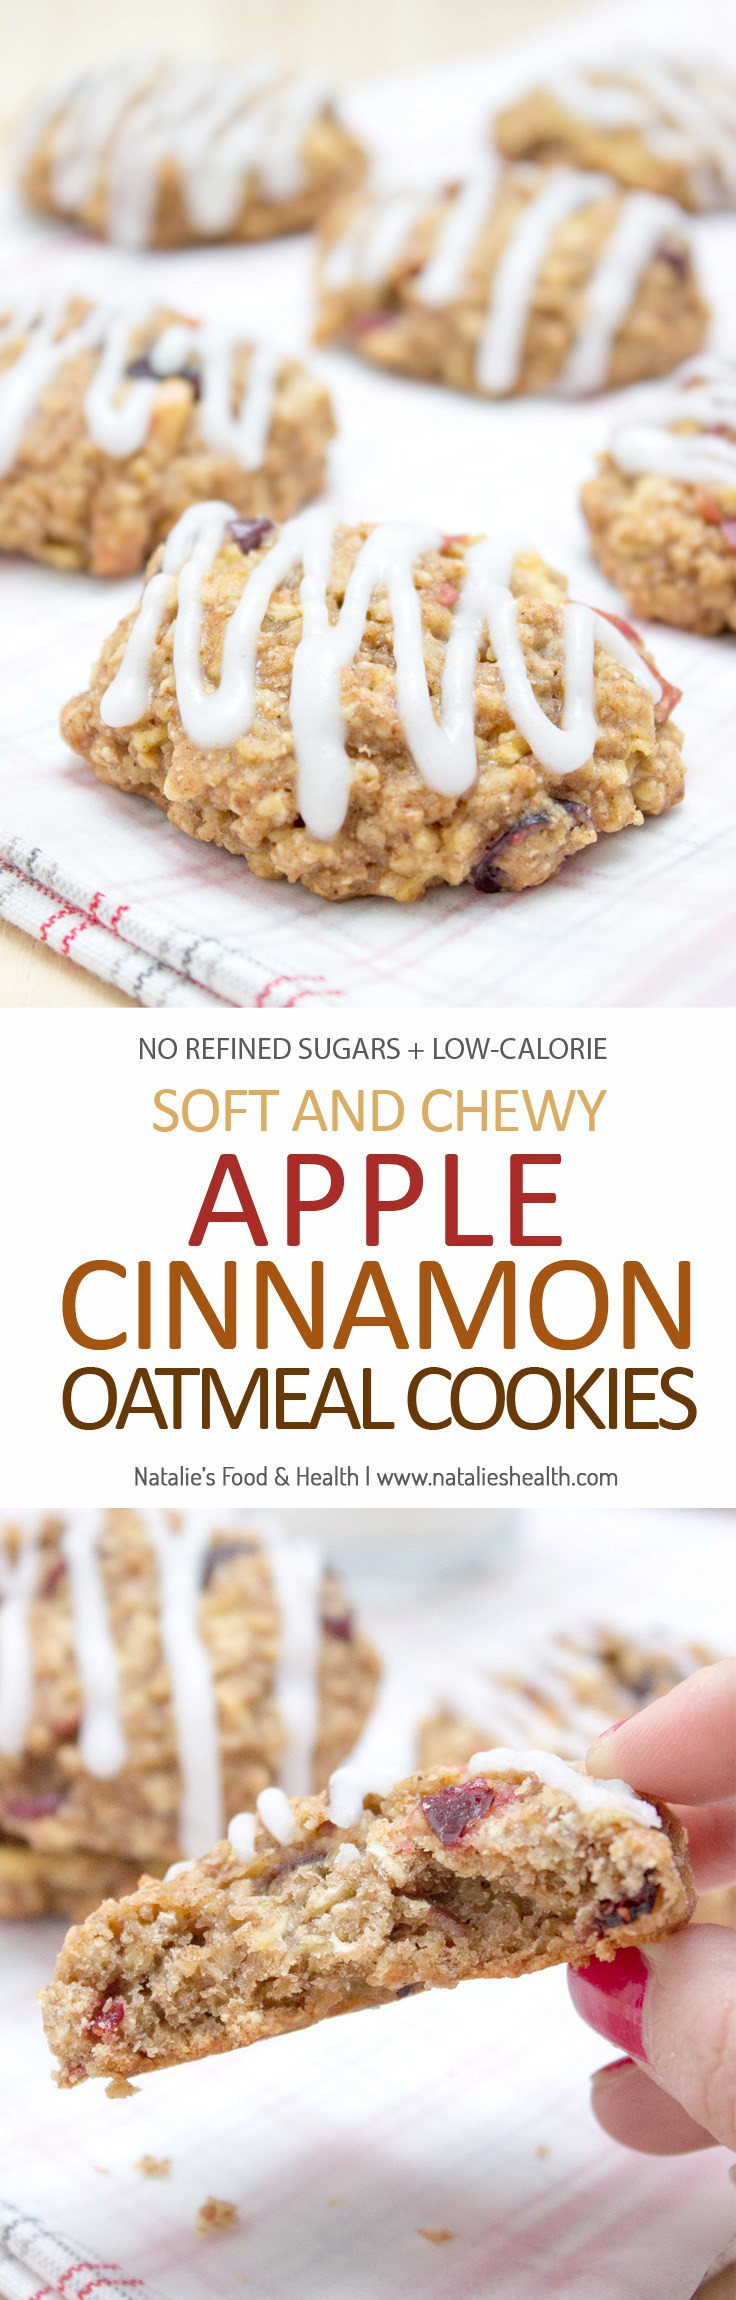 High Fiber Cookie Recipes
 Apple Cinnamon Oatmeal Cookies are perfect high fiber